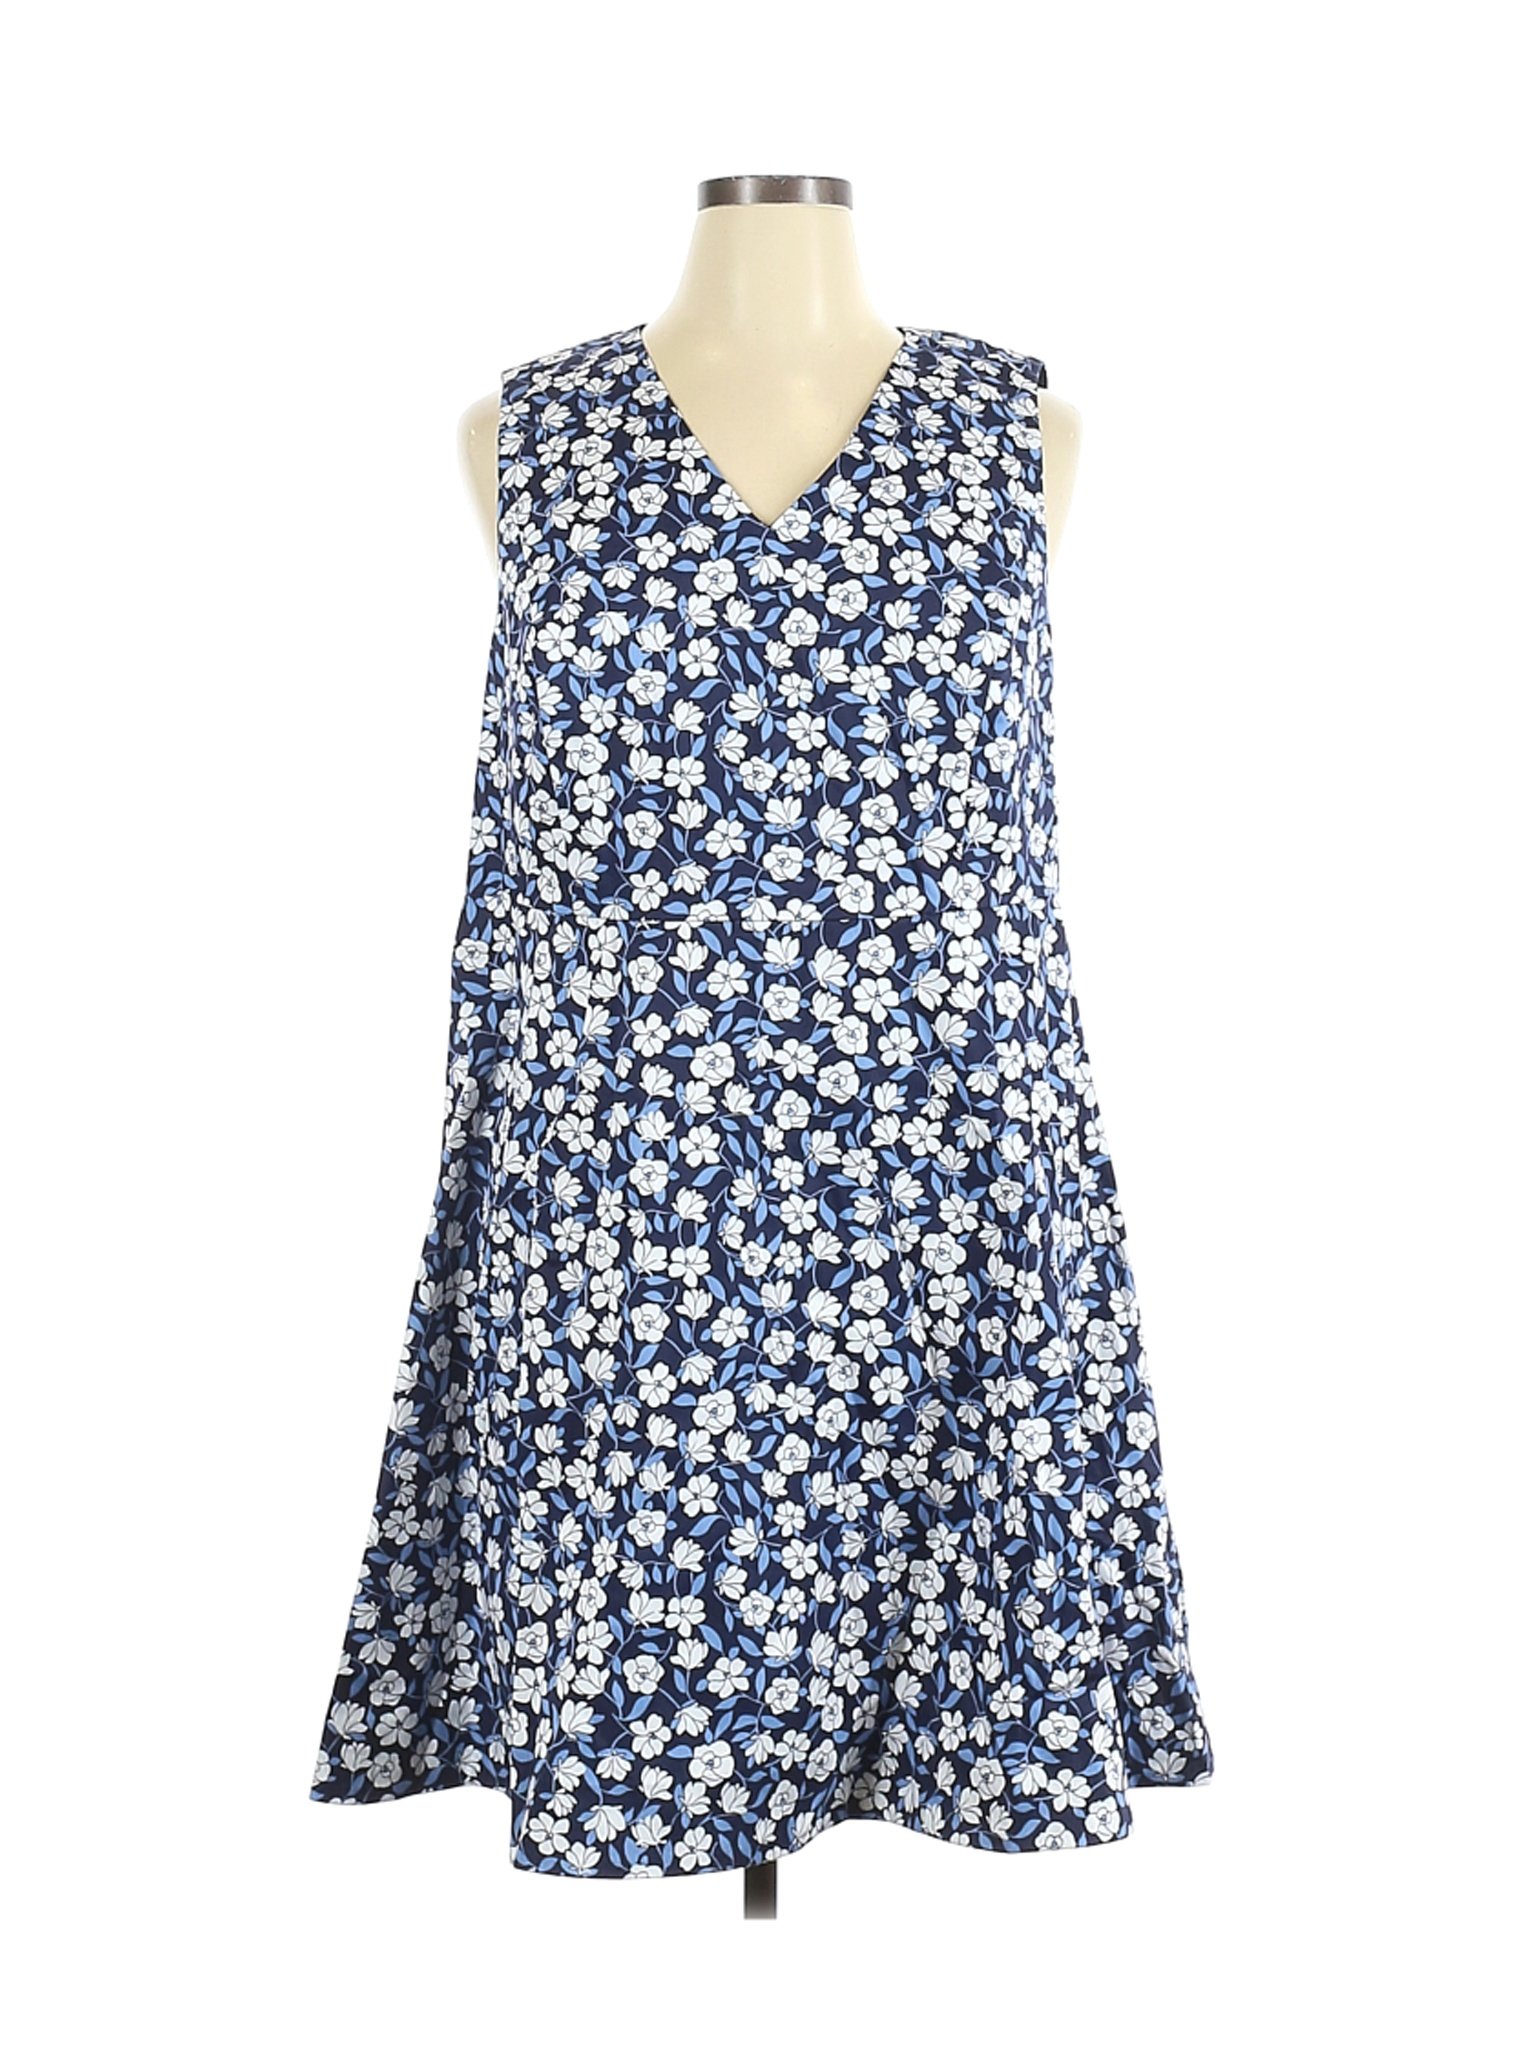 NWT Draper James Women Blue Casual Dress 16 | eBay